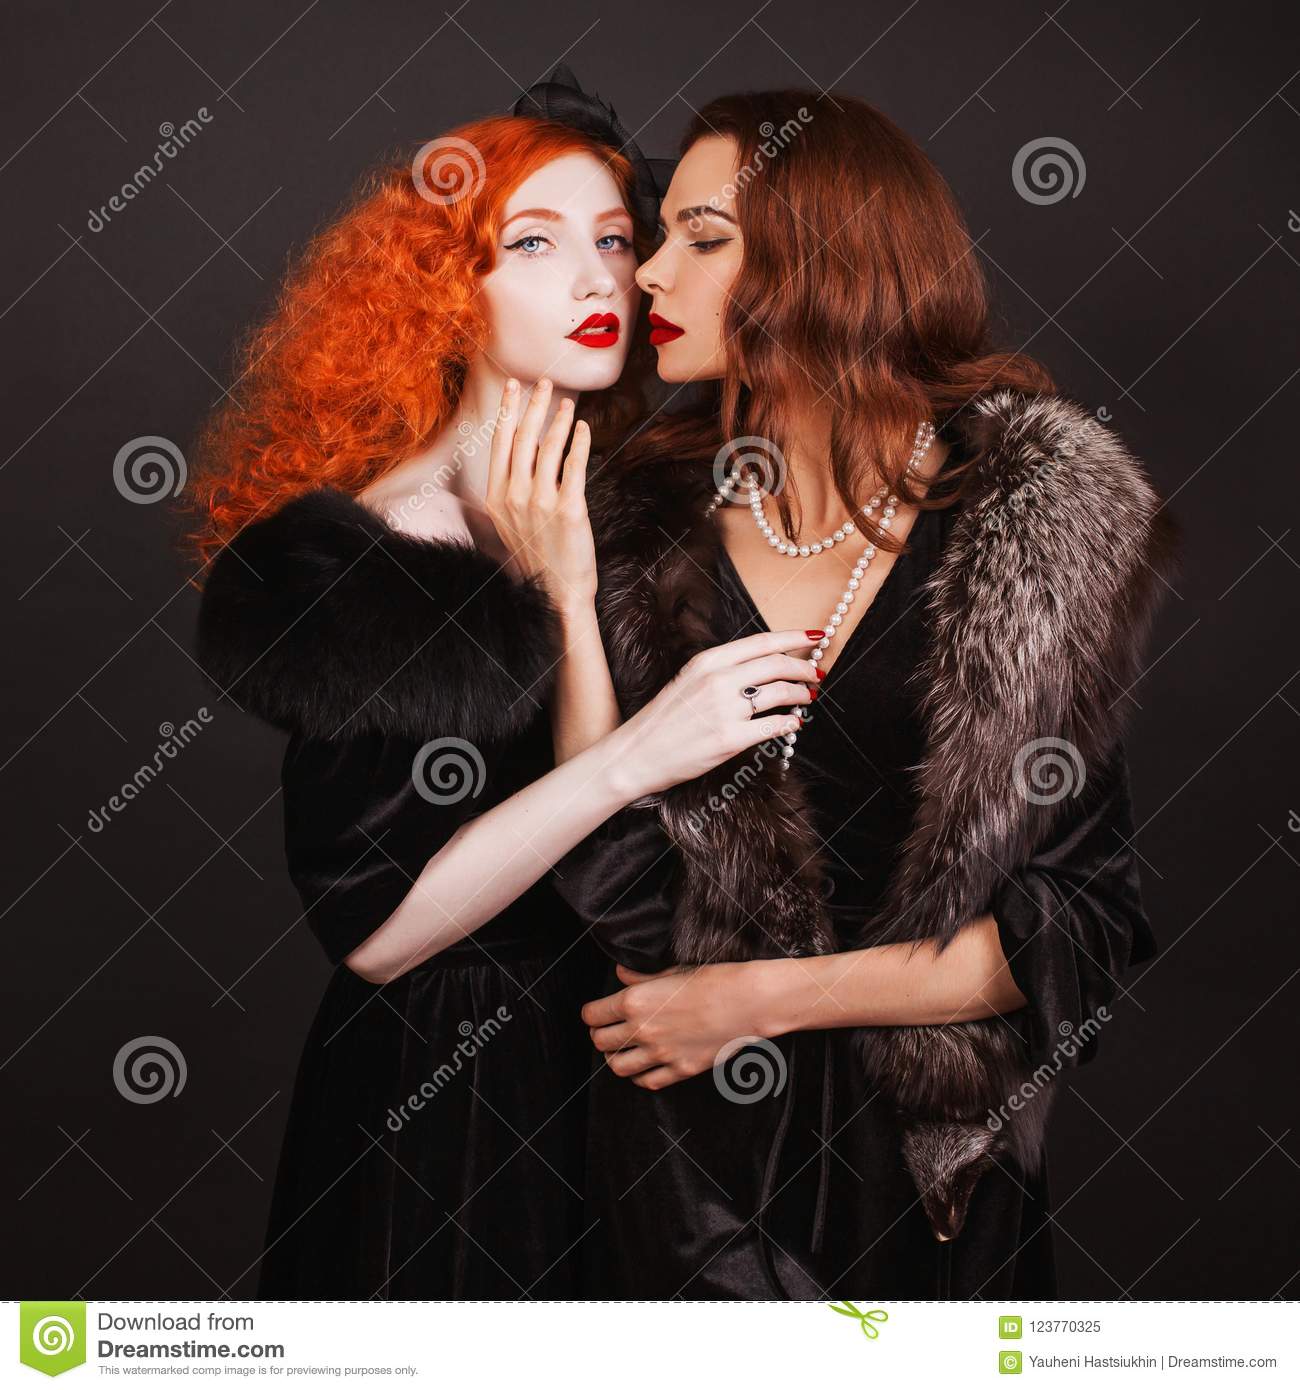 Redhead and black lesbians